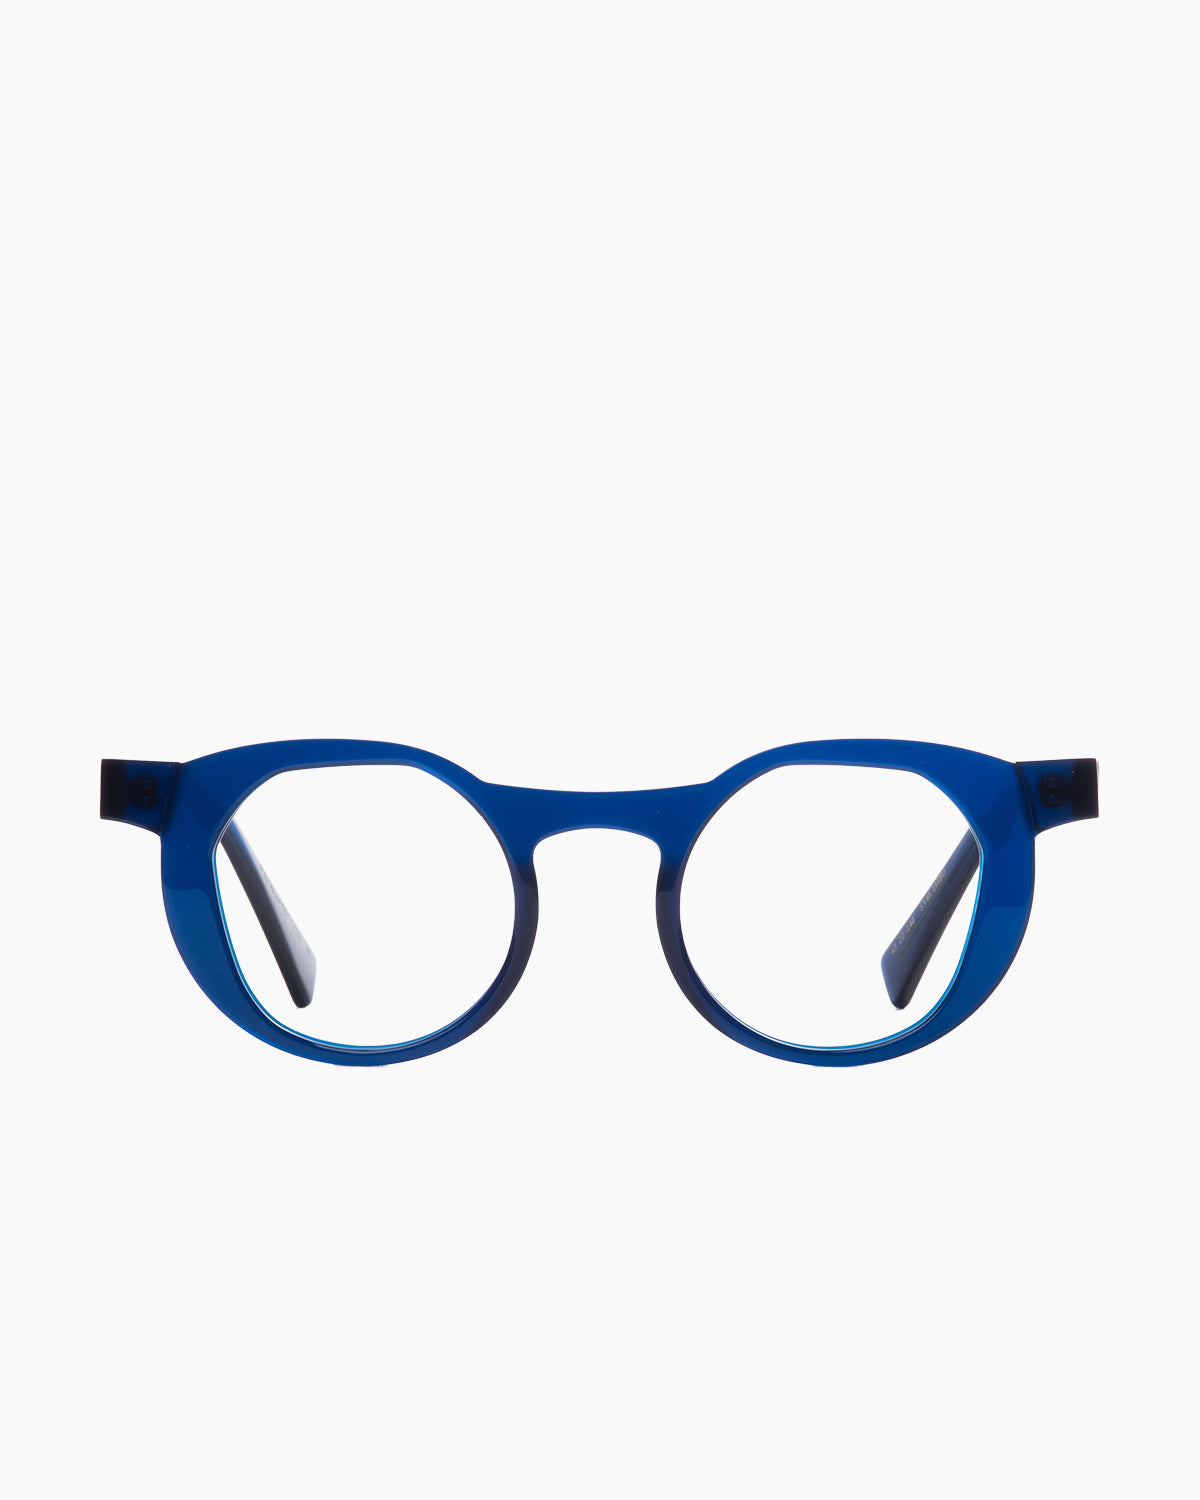 Gamine - Savamala - MilkyBlue | Bar à lunettes:  Marie-Sophie Dion